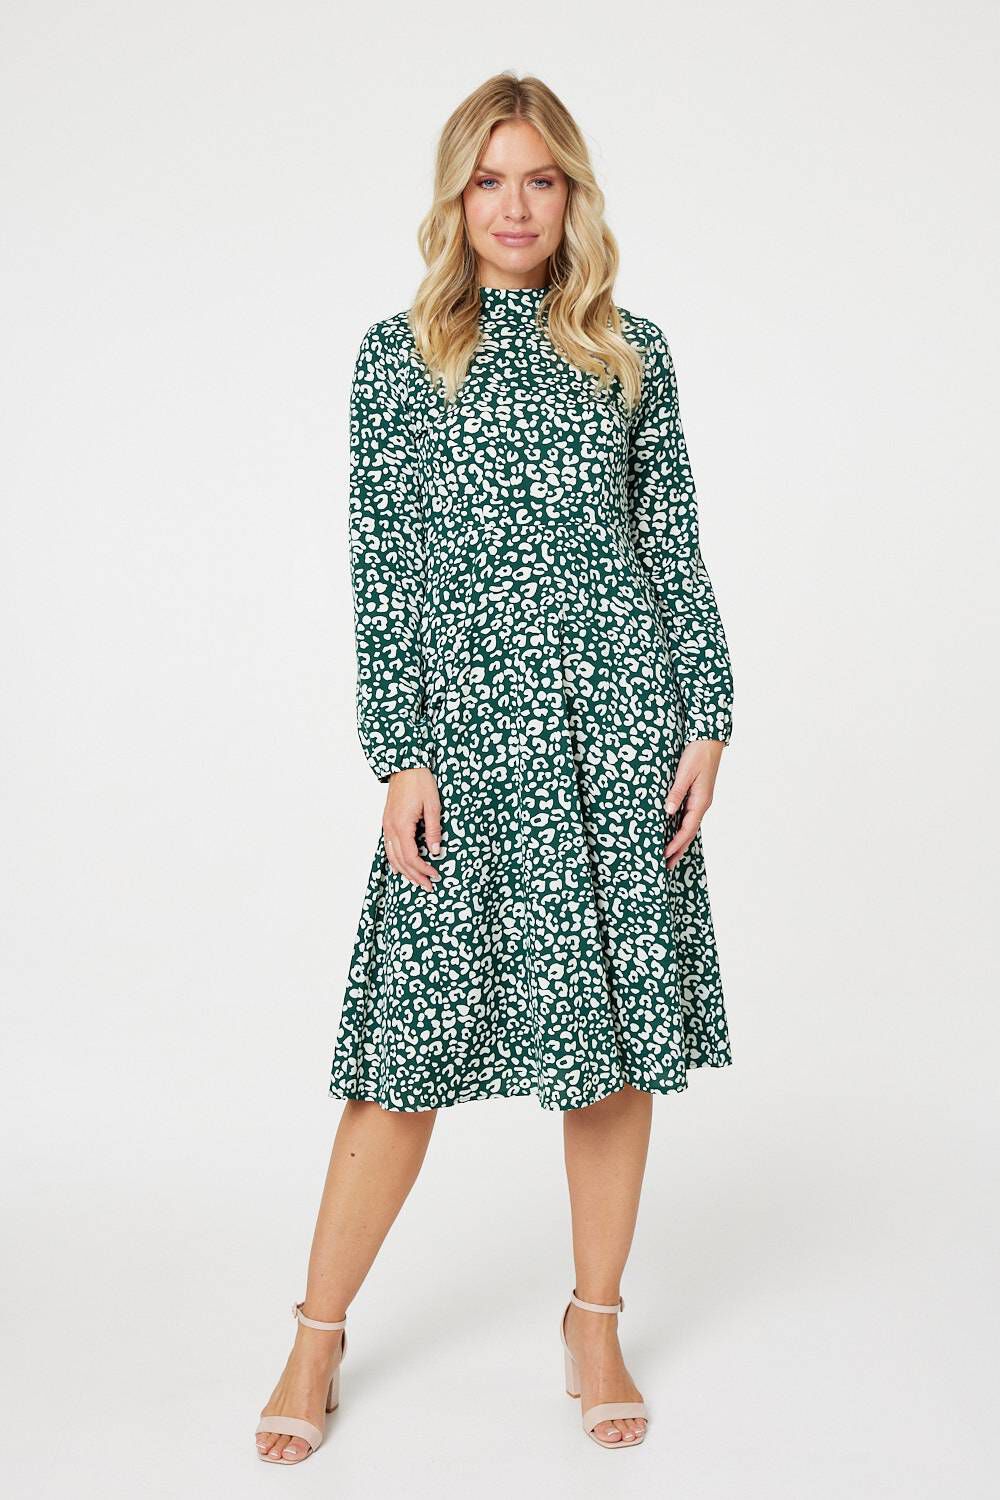 Izabel London Green - Leopard Print High Neck Tea Dress, Size: 18